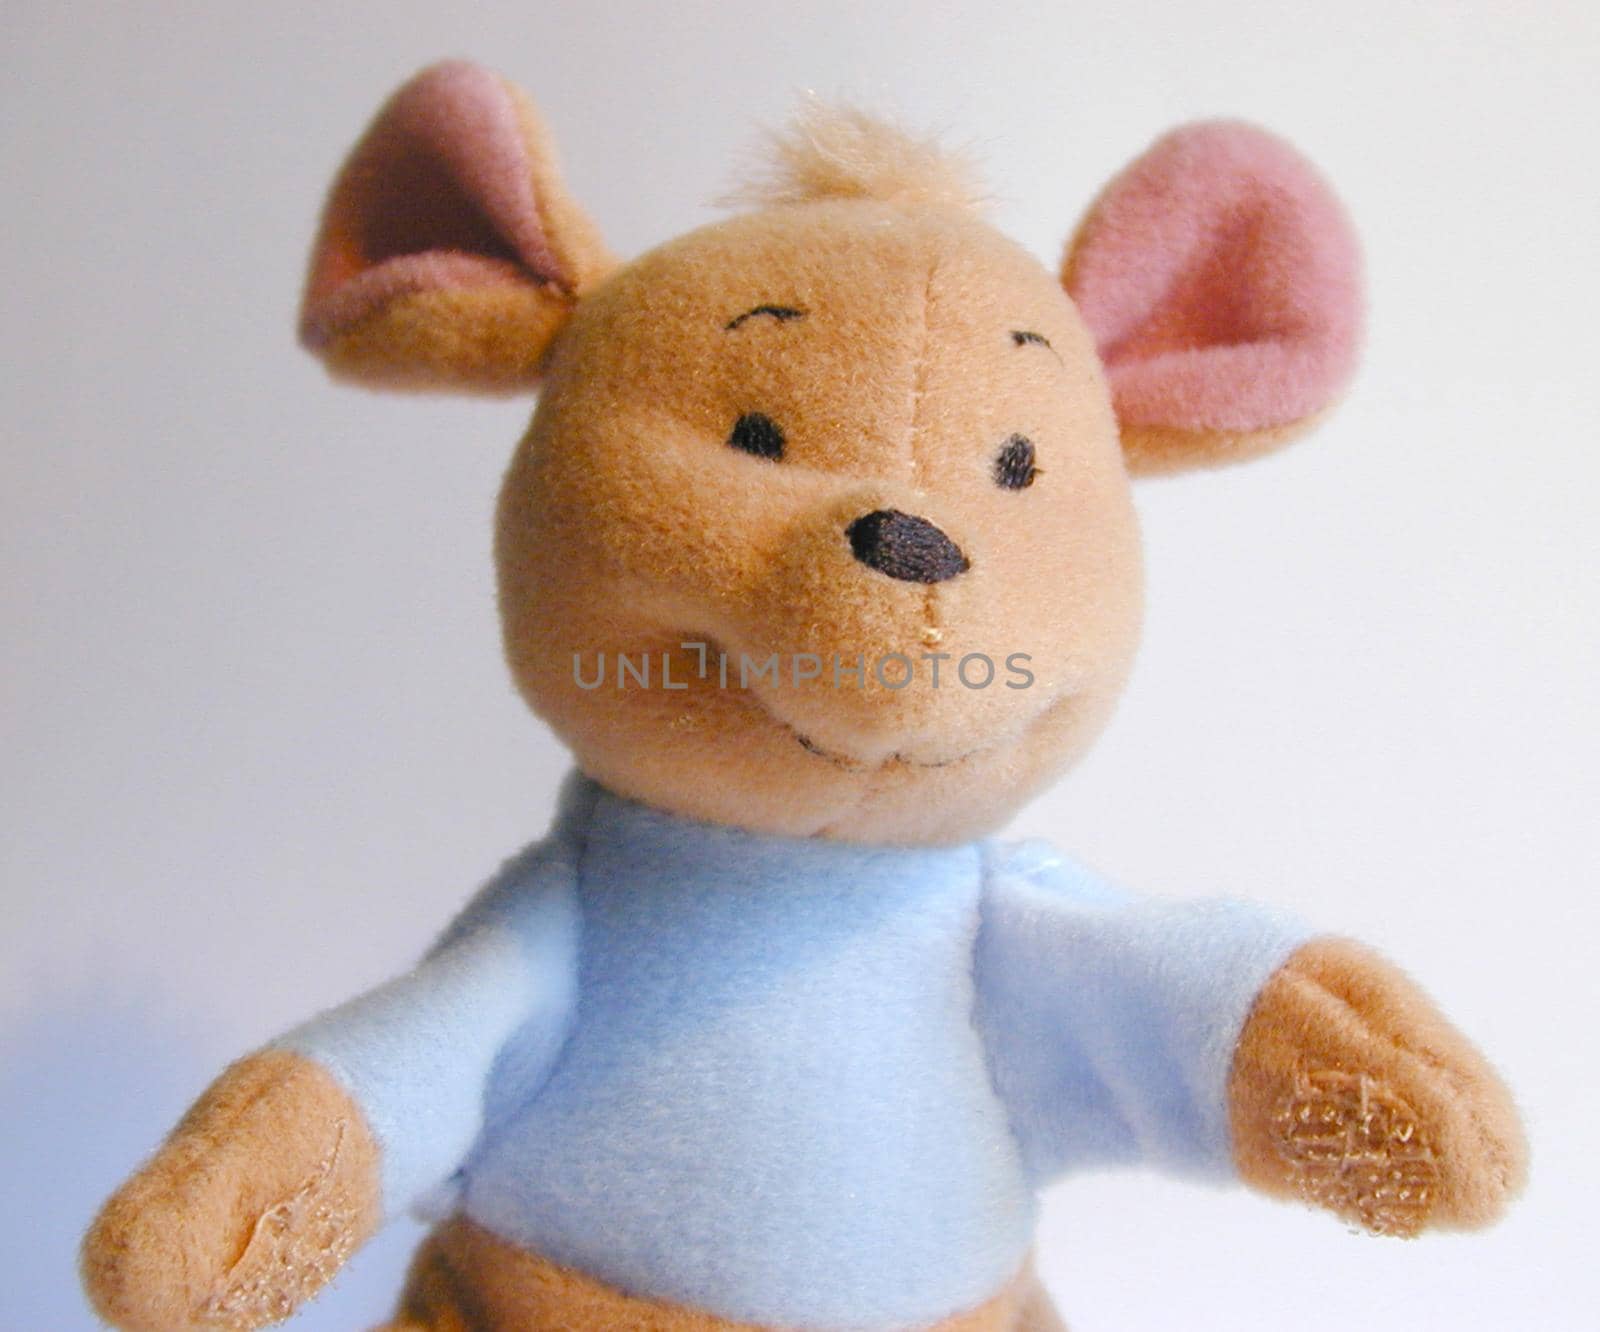 Cute little soft stuffed kangaroo toy by sanisra